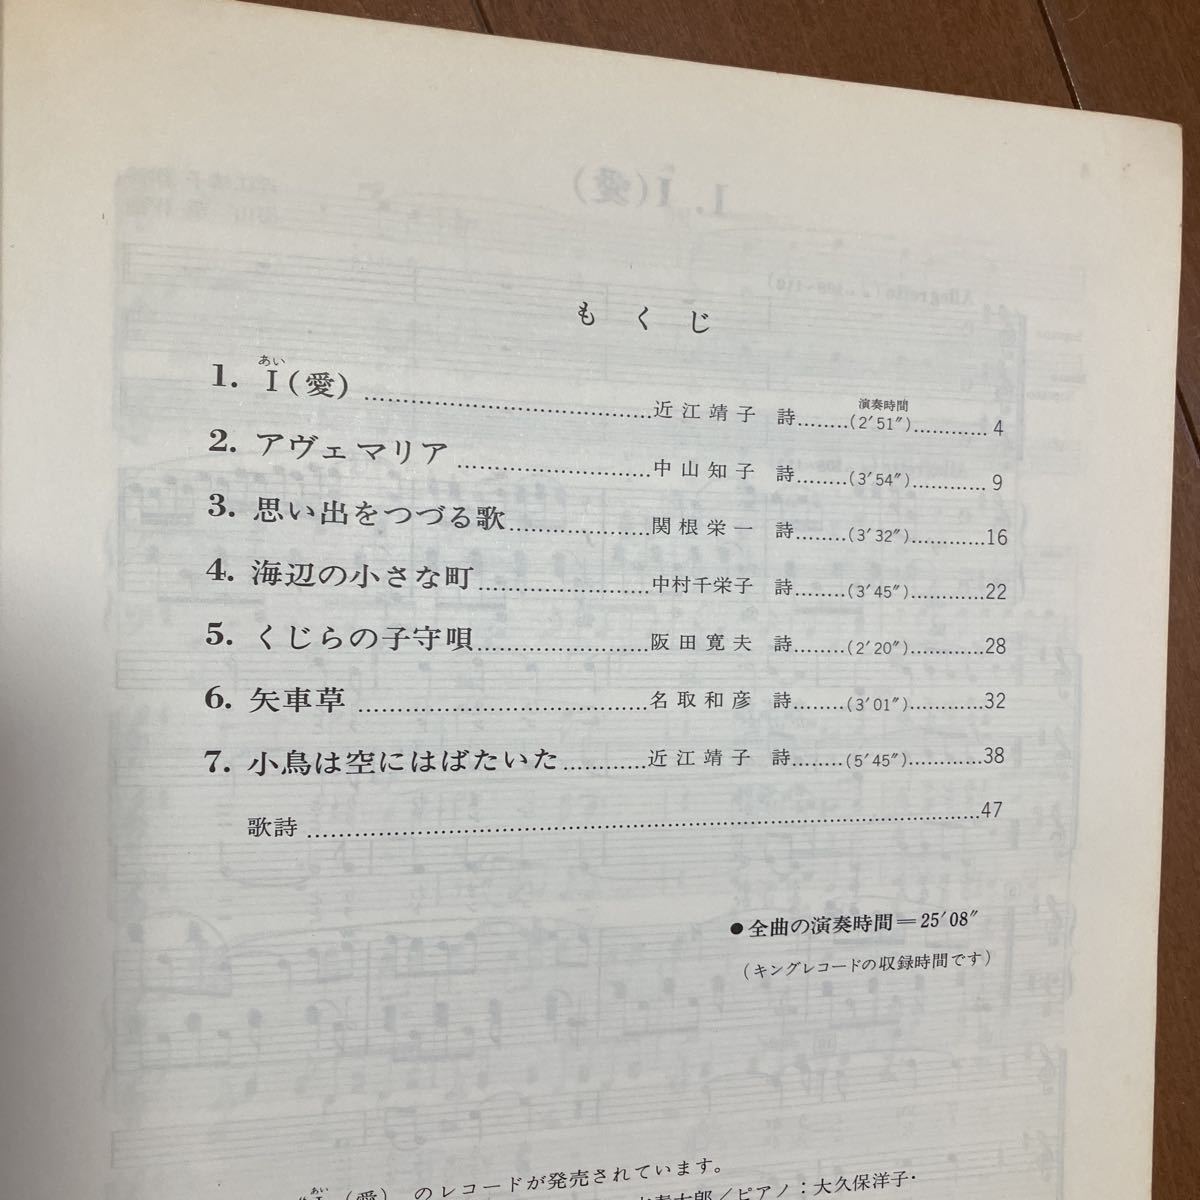 .. for musical score 7 pcs. / Kawai publish *.. Kumikyoku, chorus compilation, car nso net writing equipped 